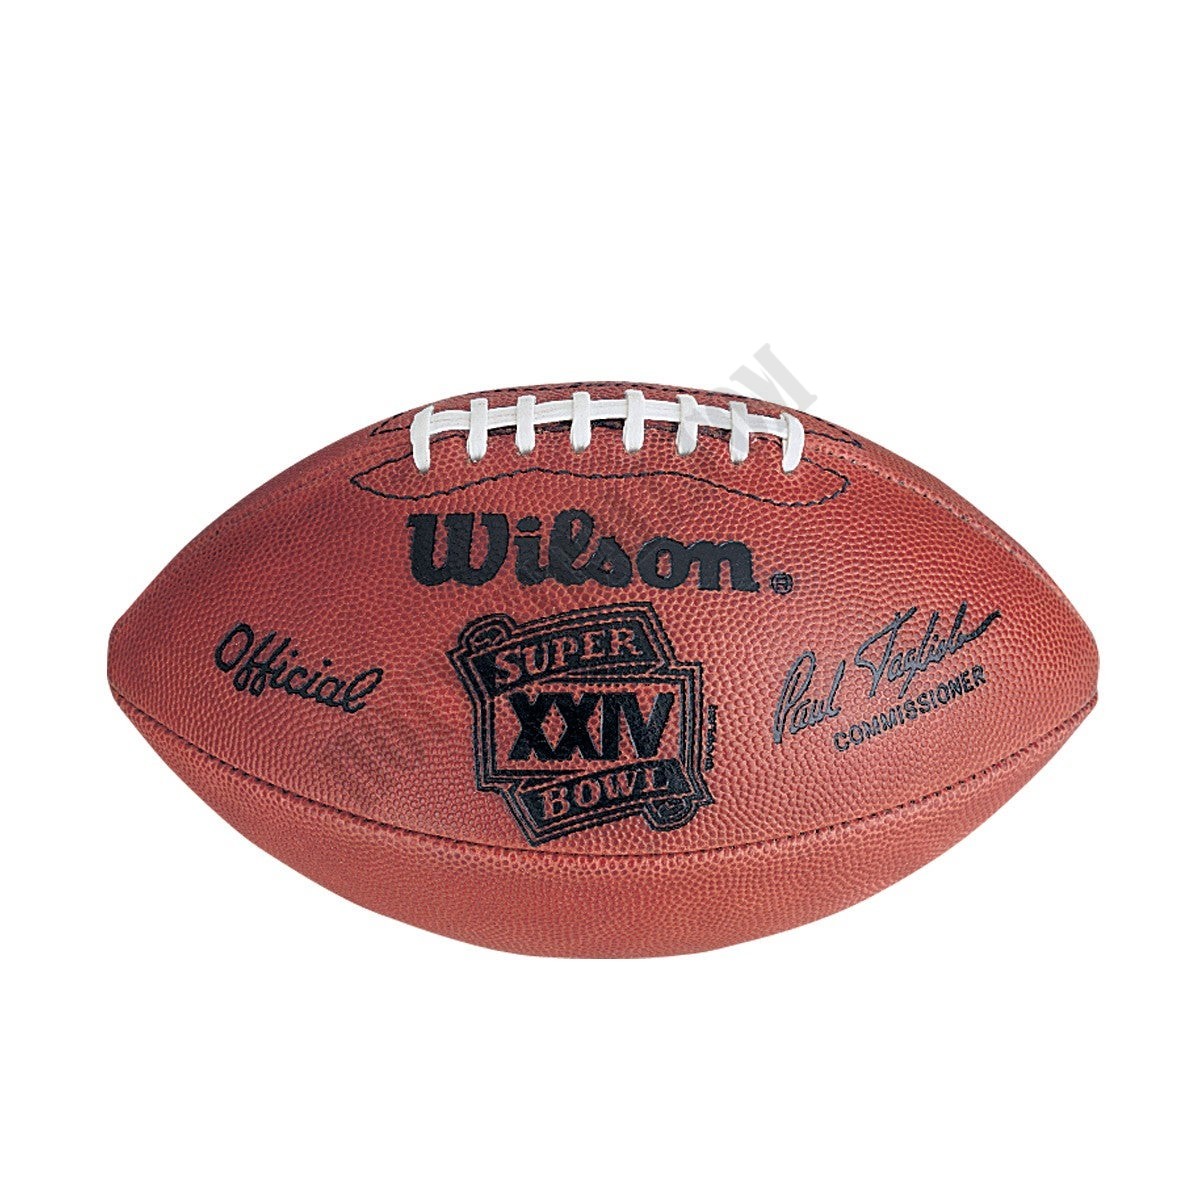 Super Bowl XXIV Game Football - San Francisco 49ers ● Wilson Promotions - -0